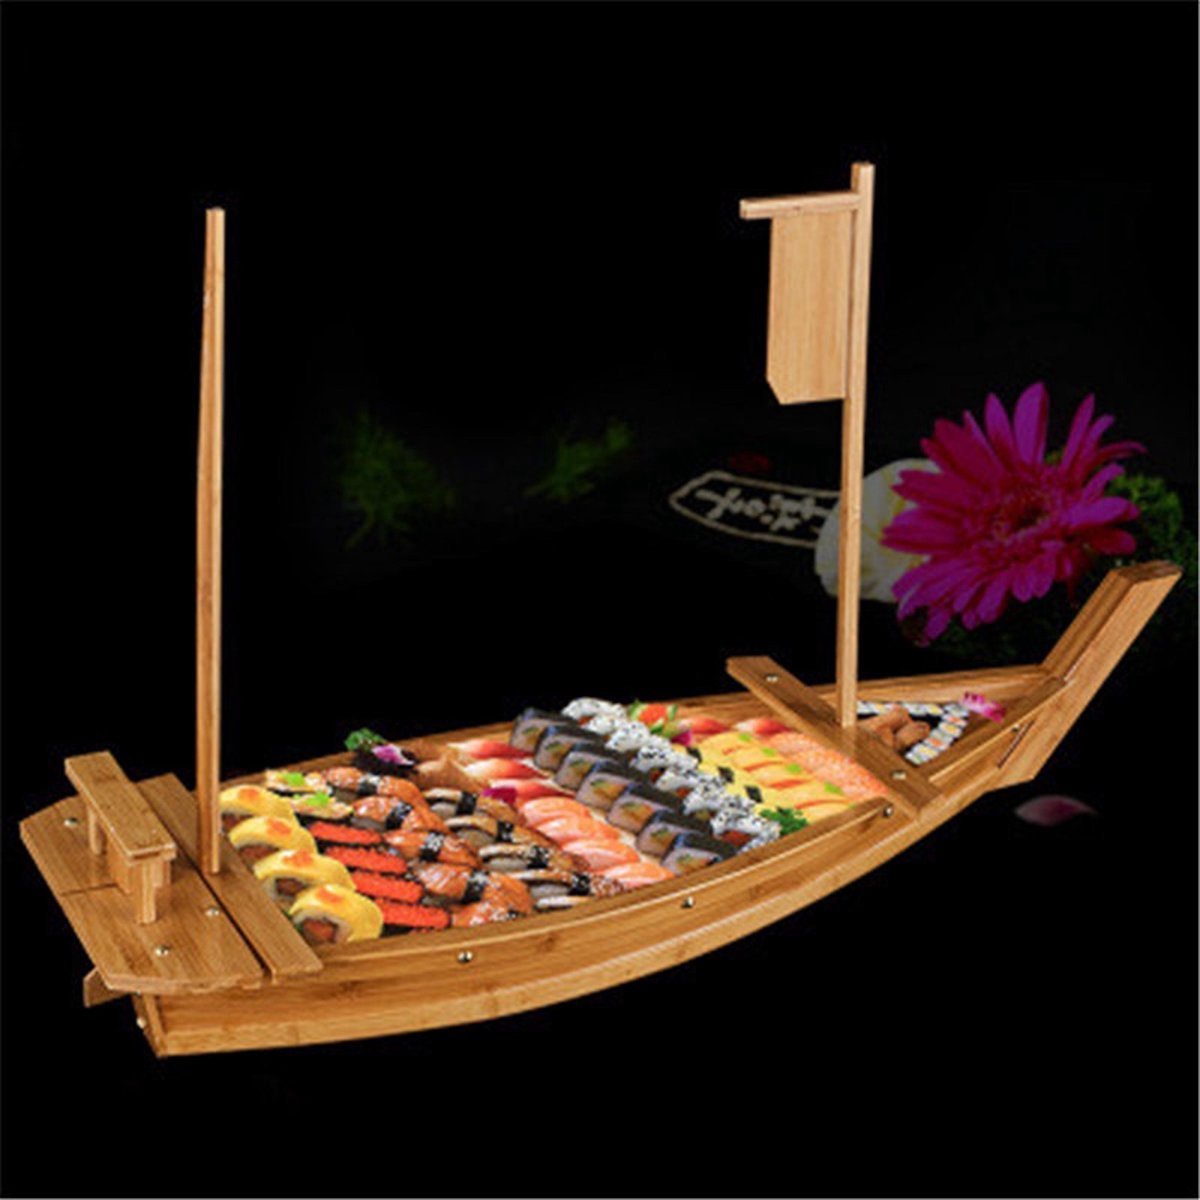 Sushi Boot-Dienblad ,Sushi Boat Bamboo 70cm, Voor Sushi,Snack,Thuis,Restaurant,Hotel,Japanse en Koreaanse Style